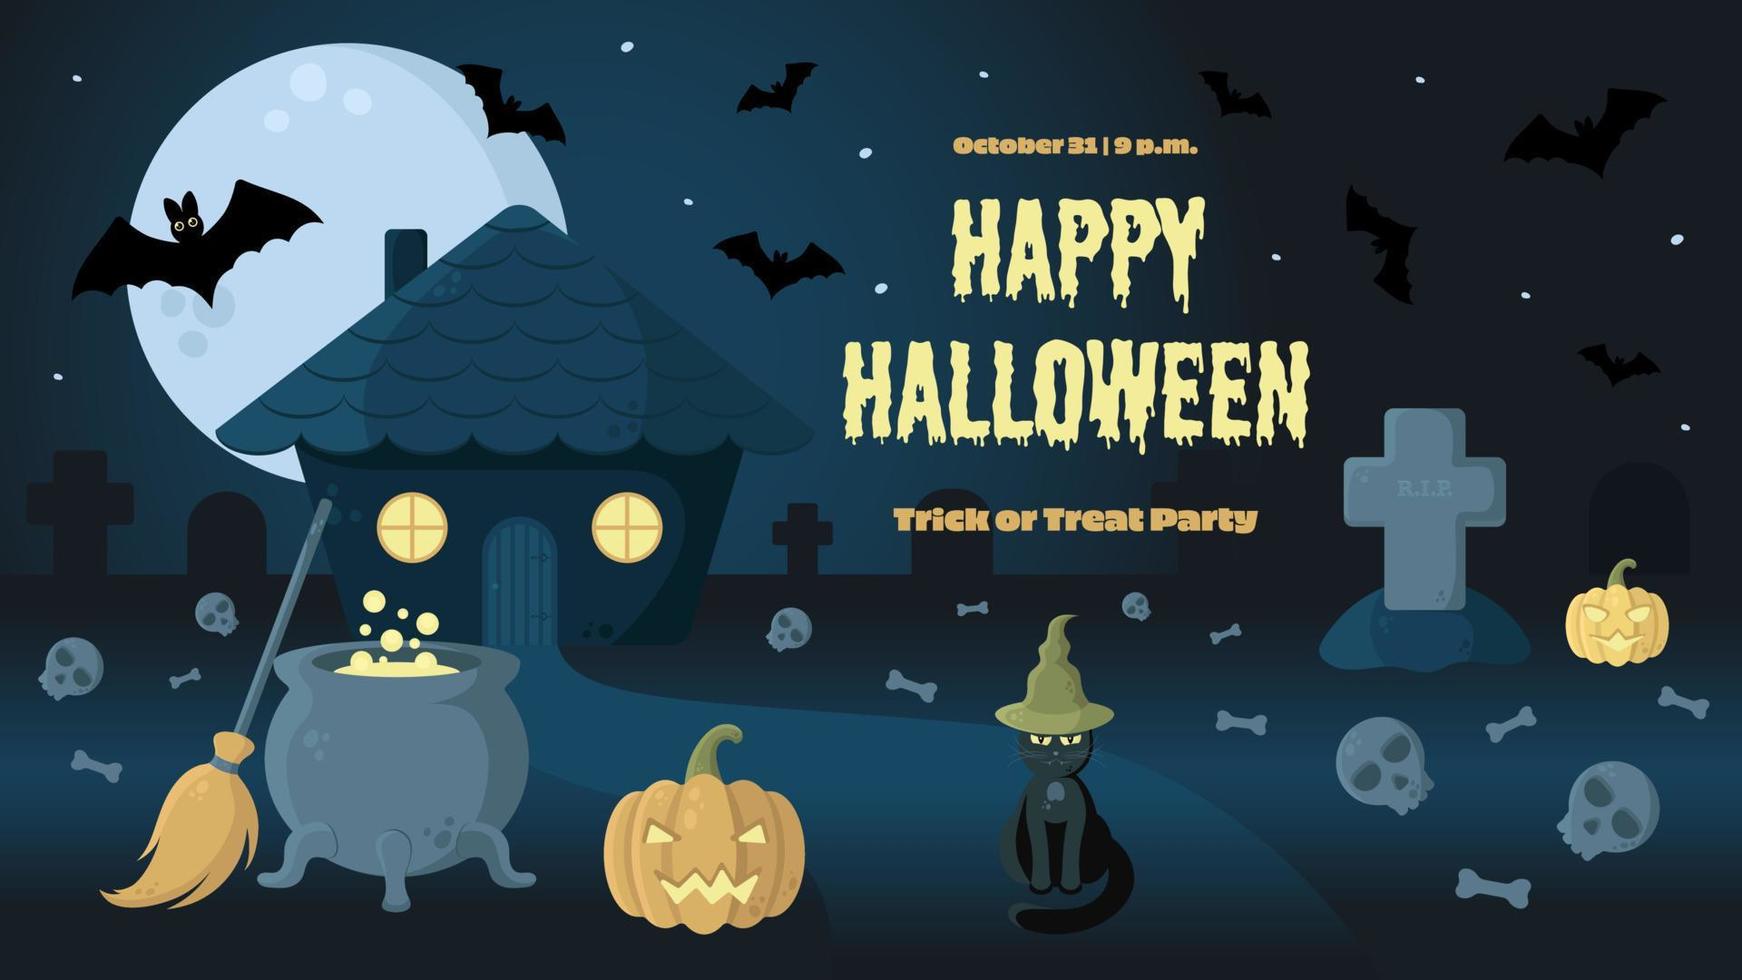 banner de vector de noche de halloween con cabaña de brujas, cementerio, linterna de gato, caldero, escoba, gato negro y murciélagos. perfecto para sitios web, redes sociales, materiales impresos, etc.